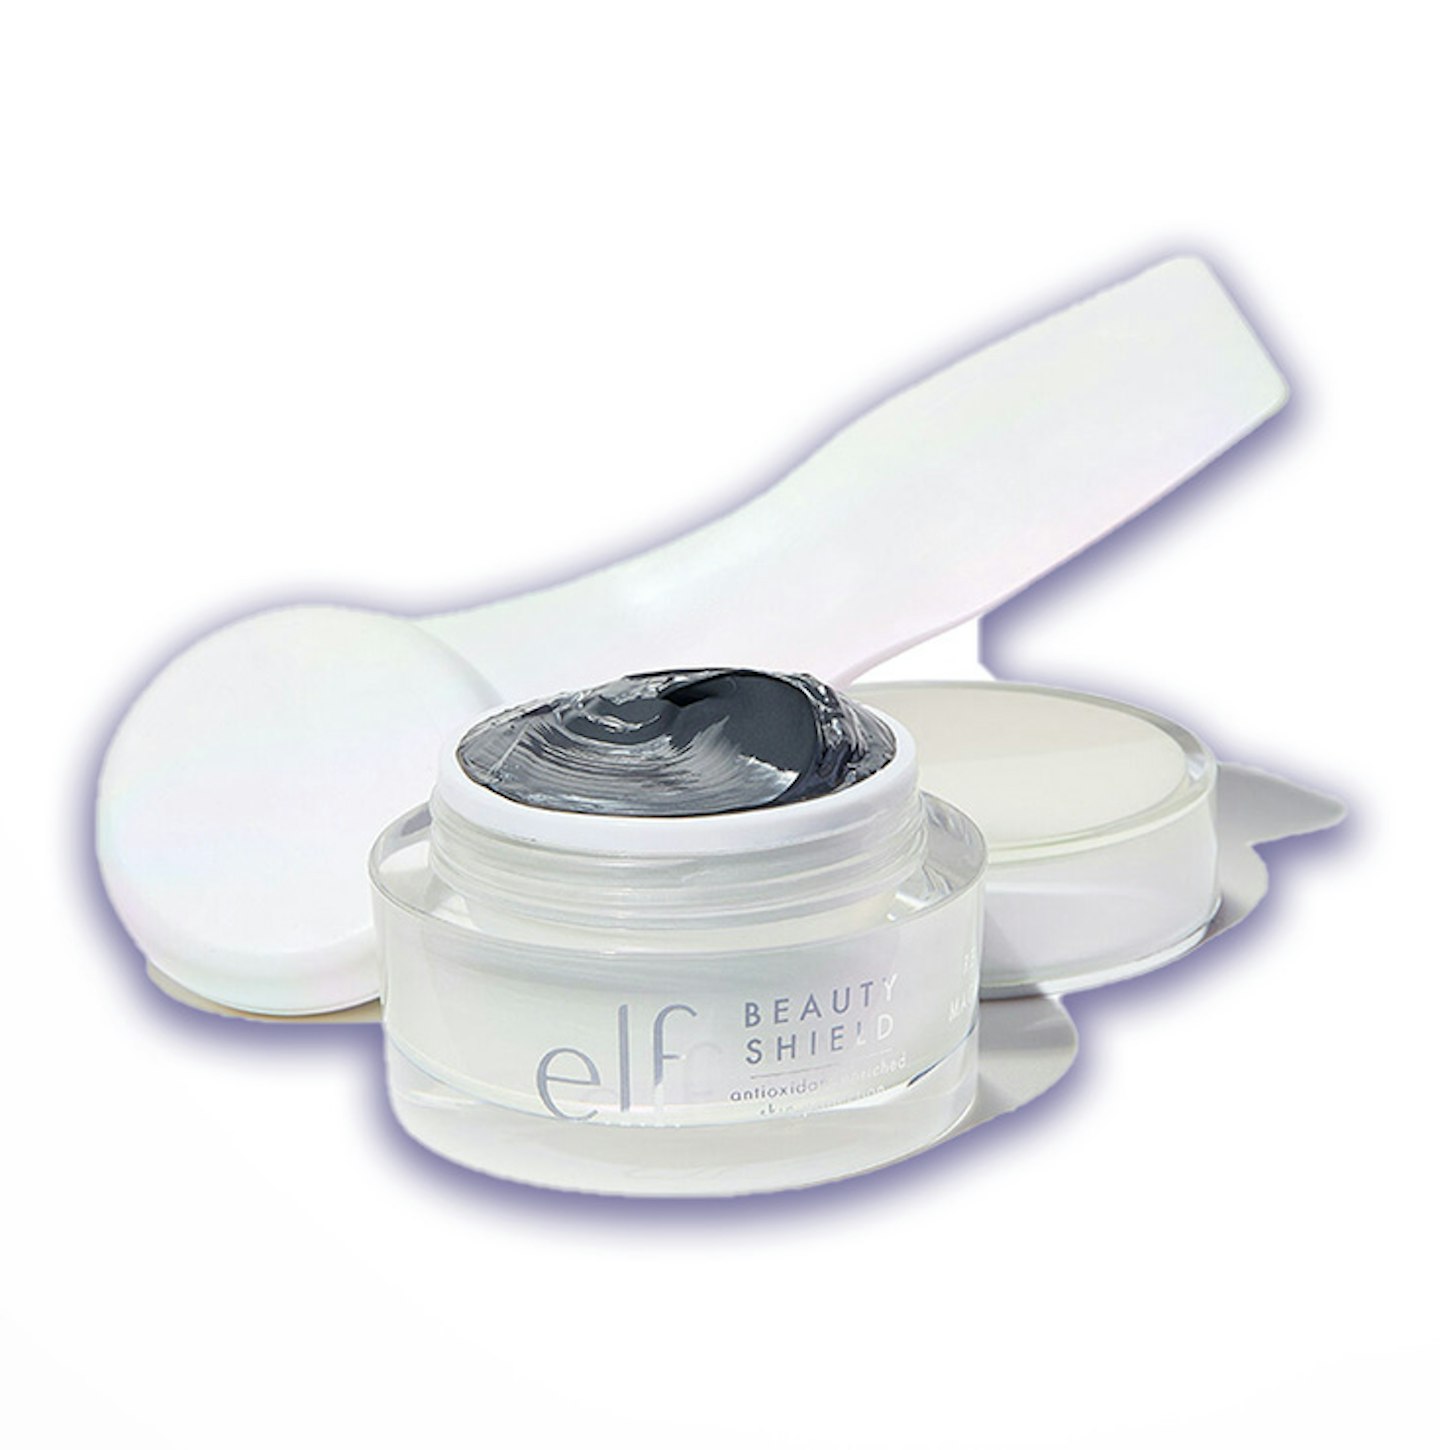 E.l.f Beauty Shield Magnetic Mask Kit